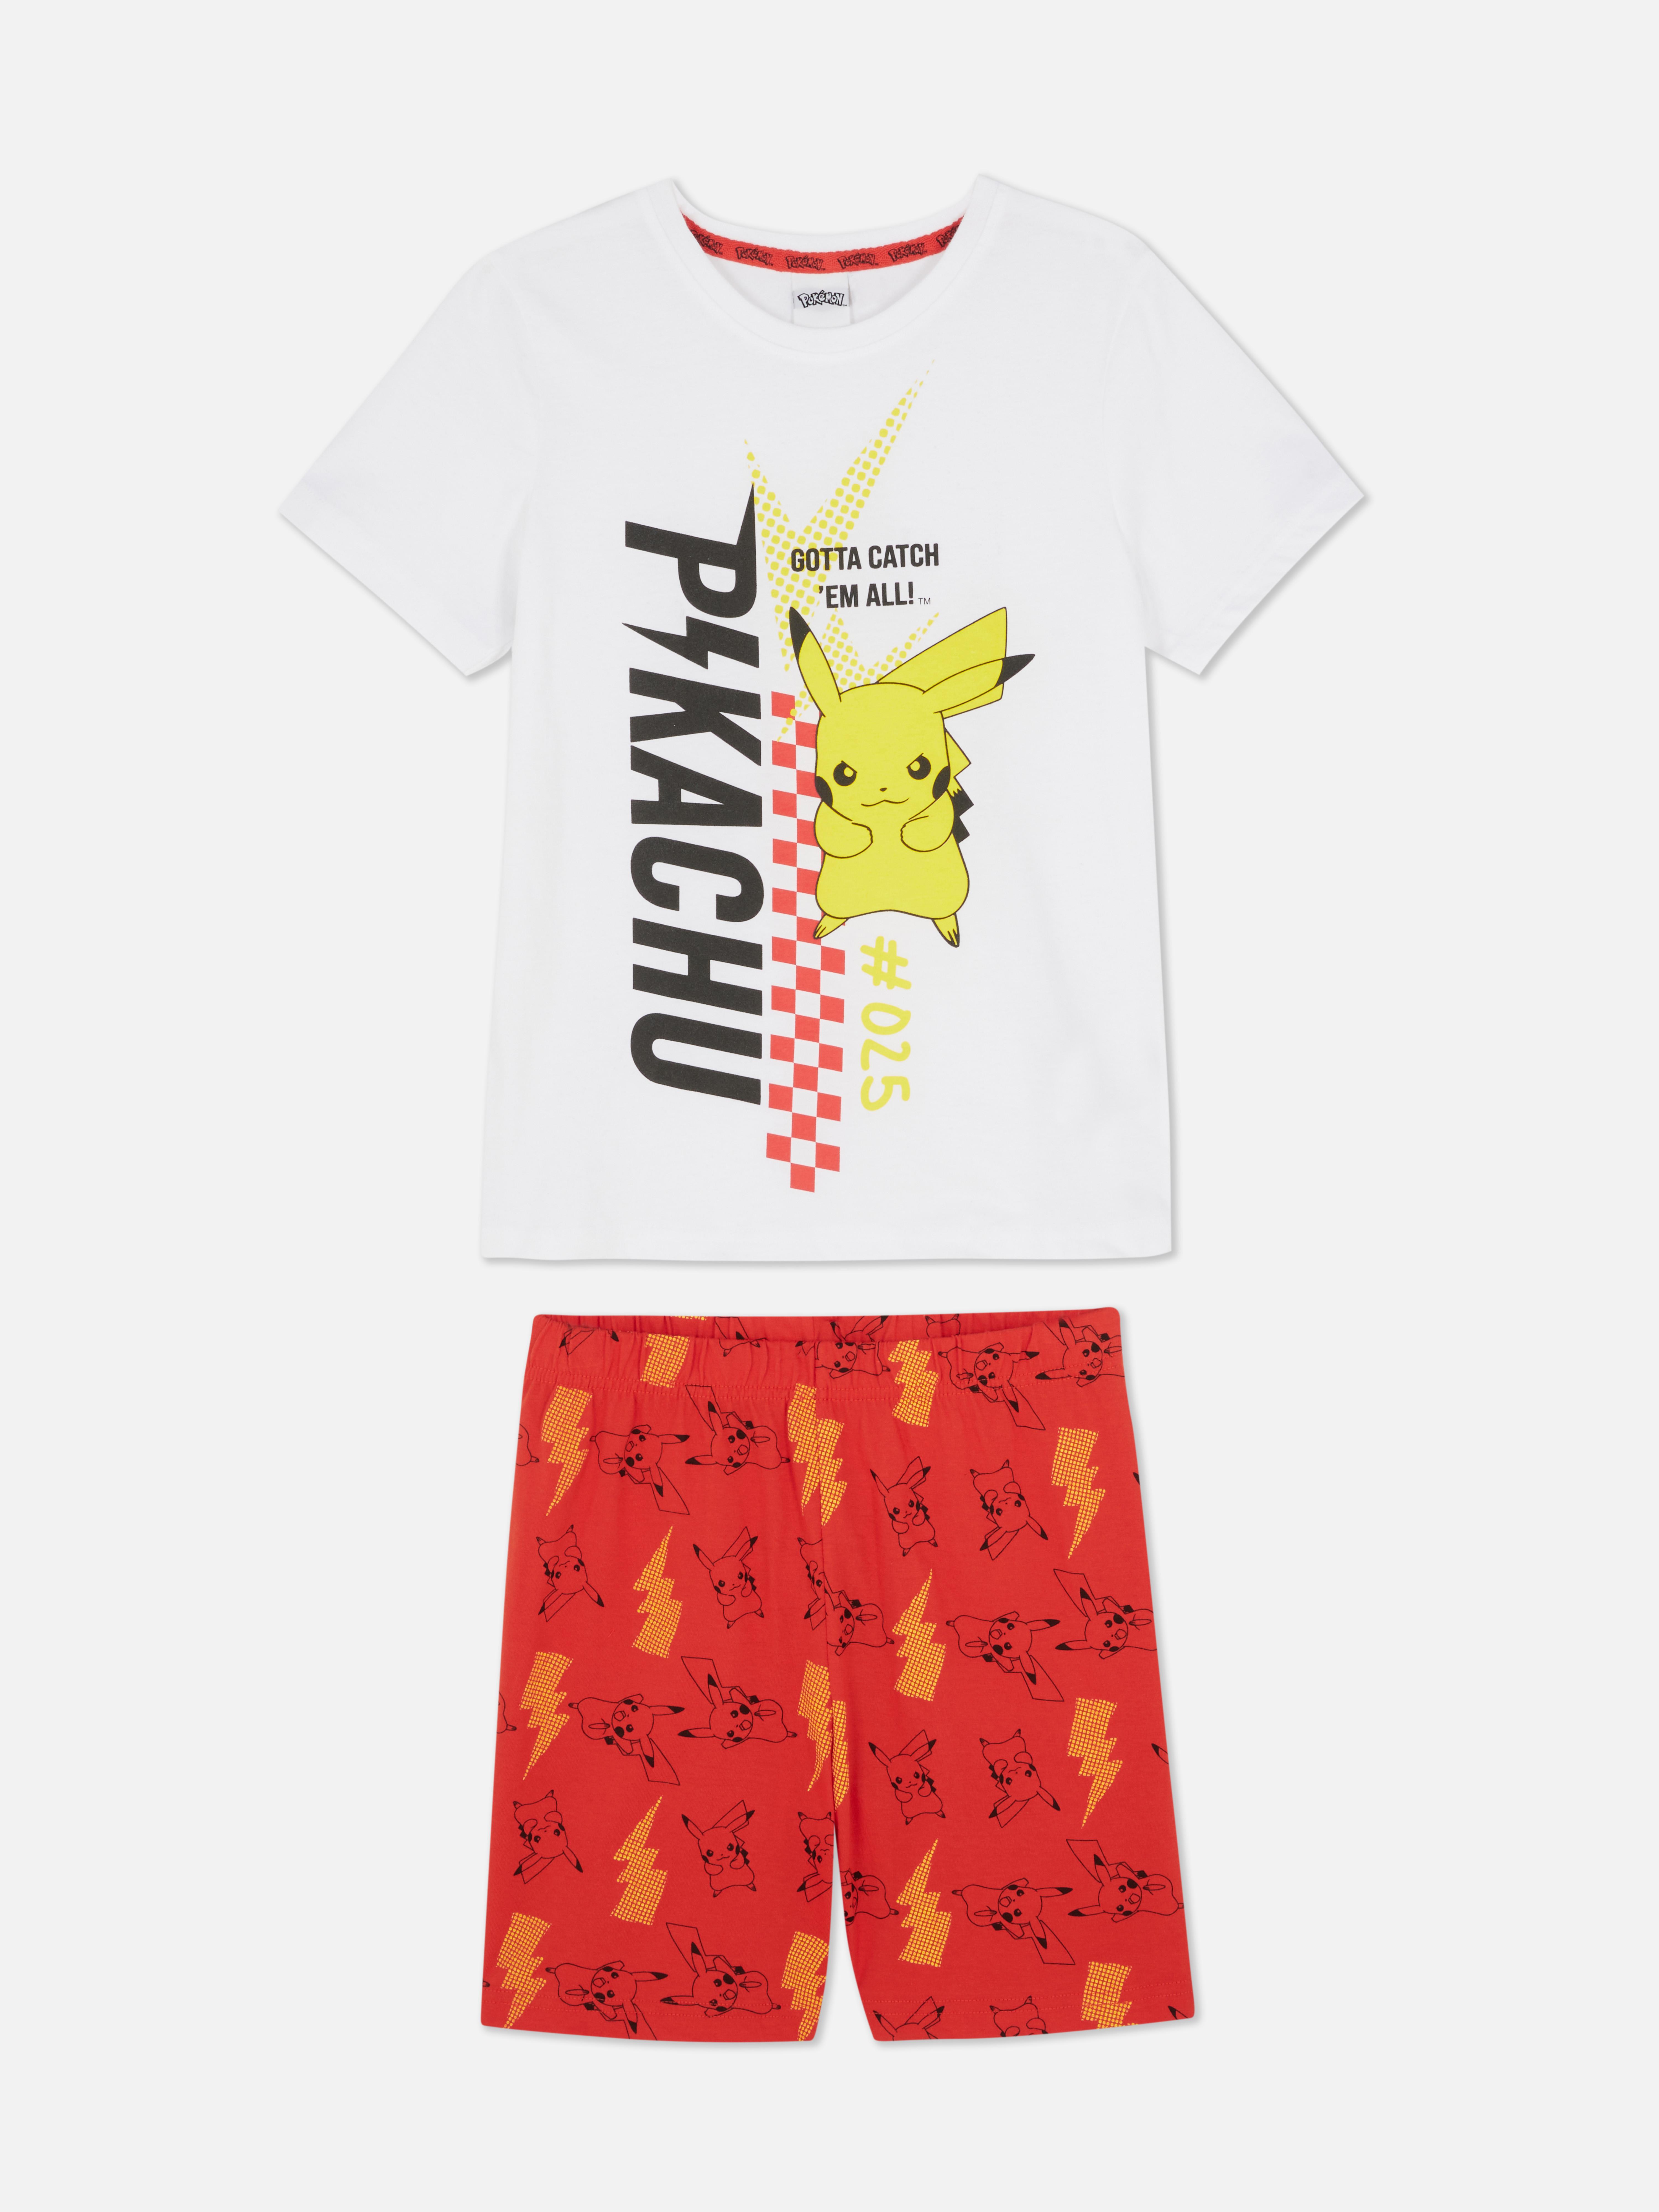 „Pokémon Pikachu“ Schlafanzug